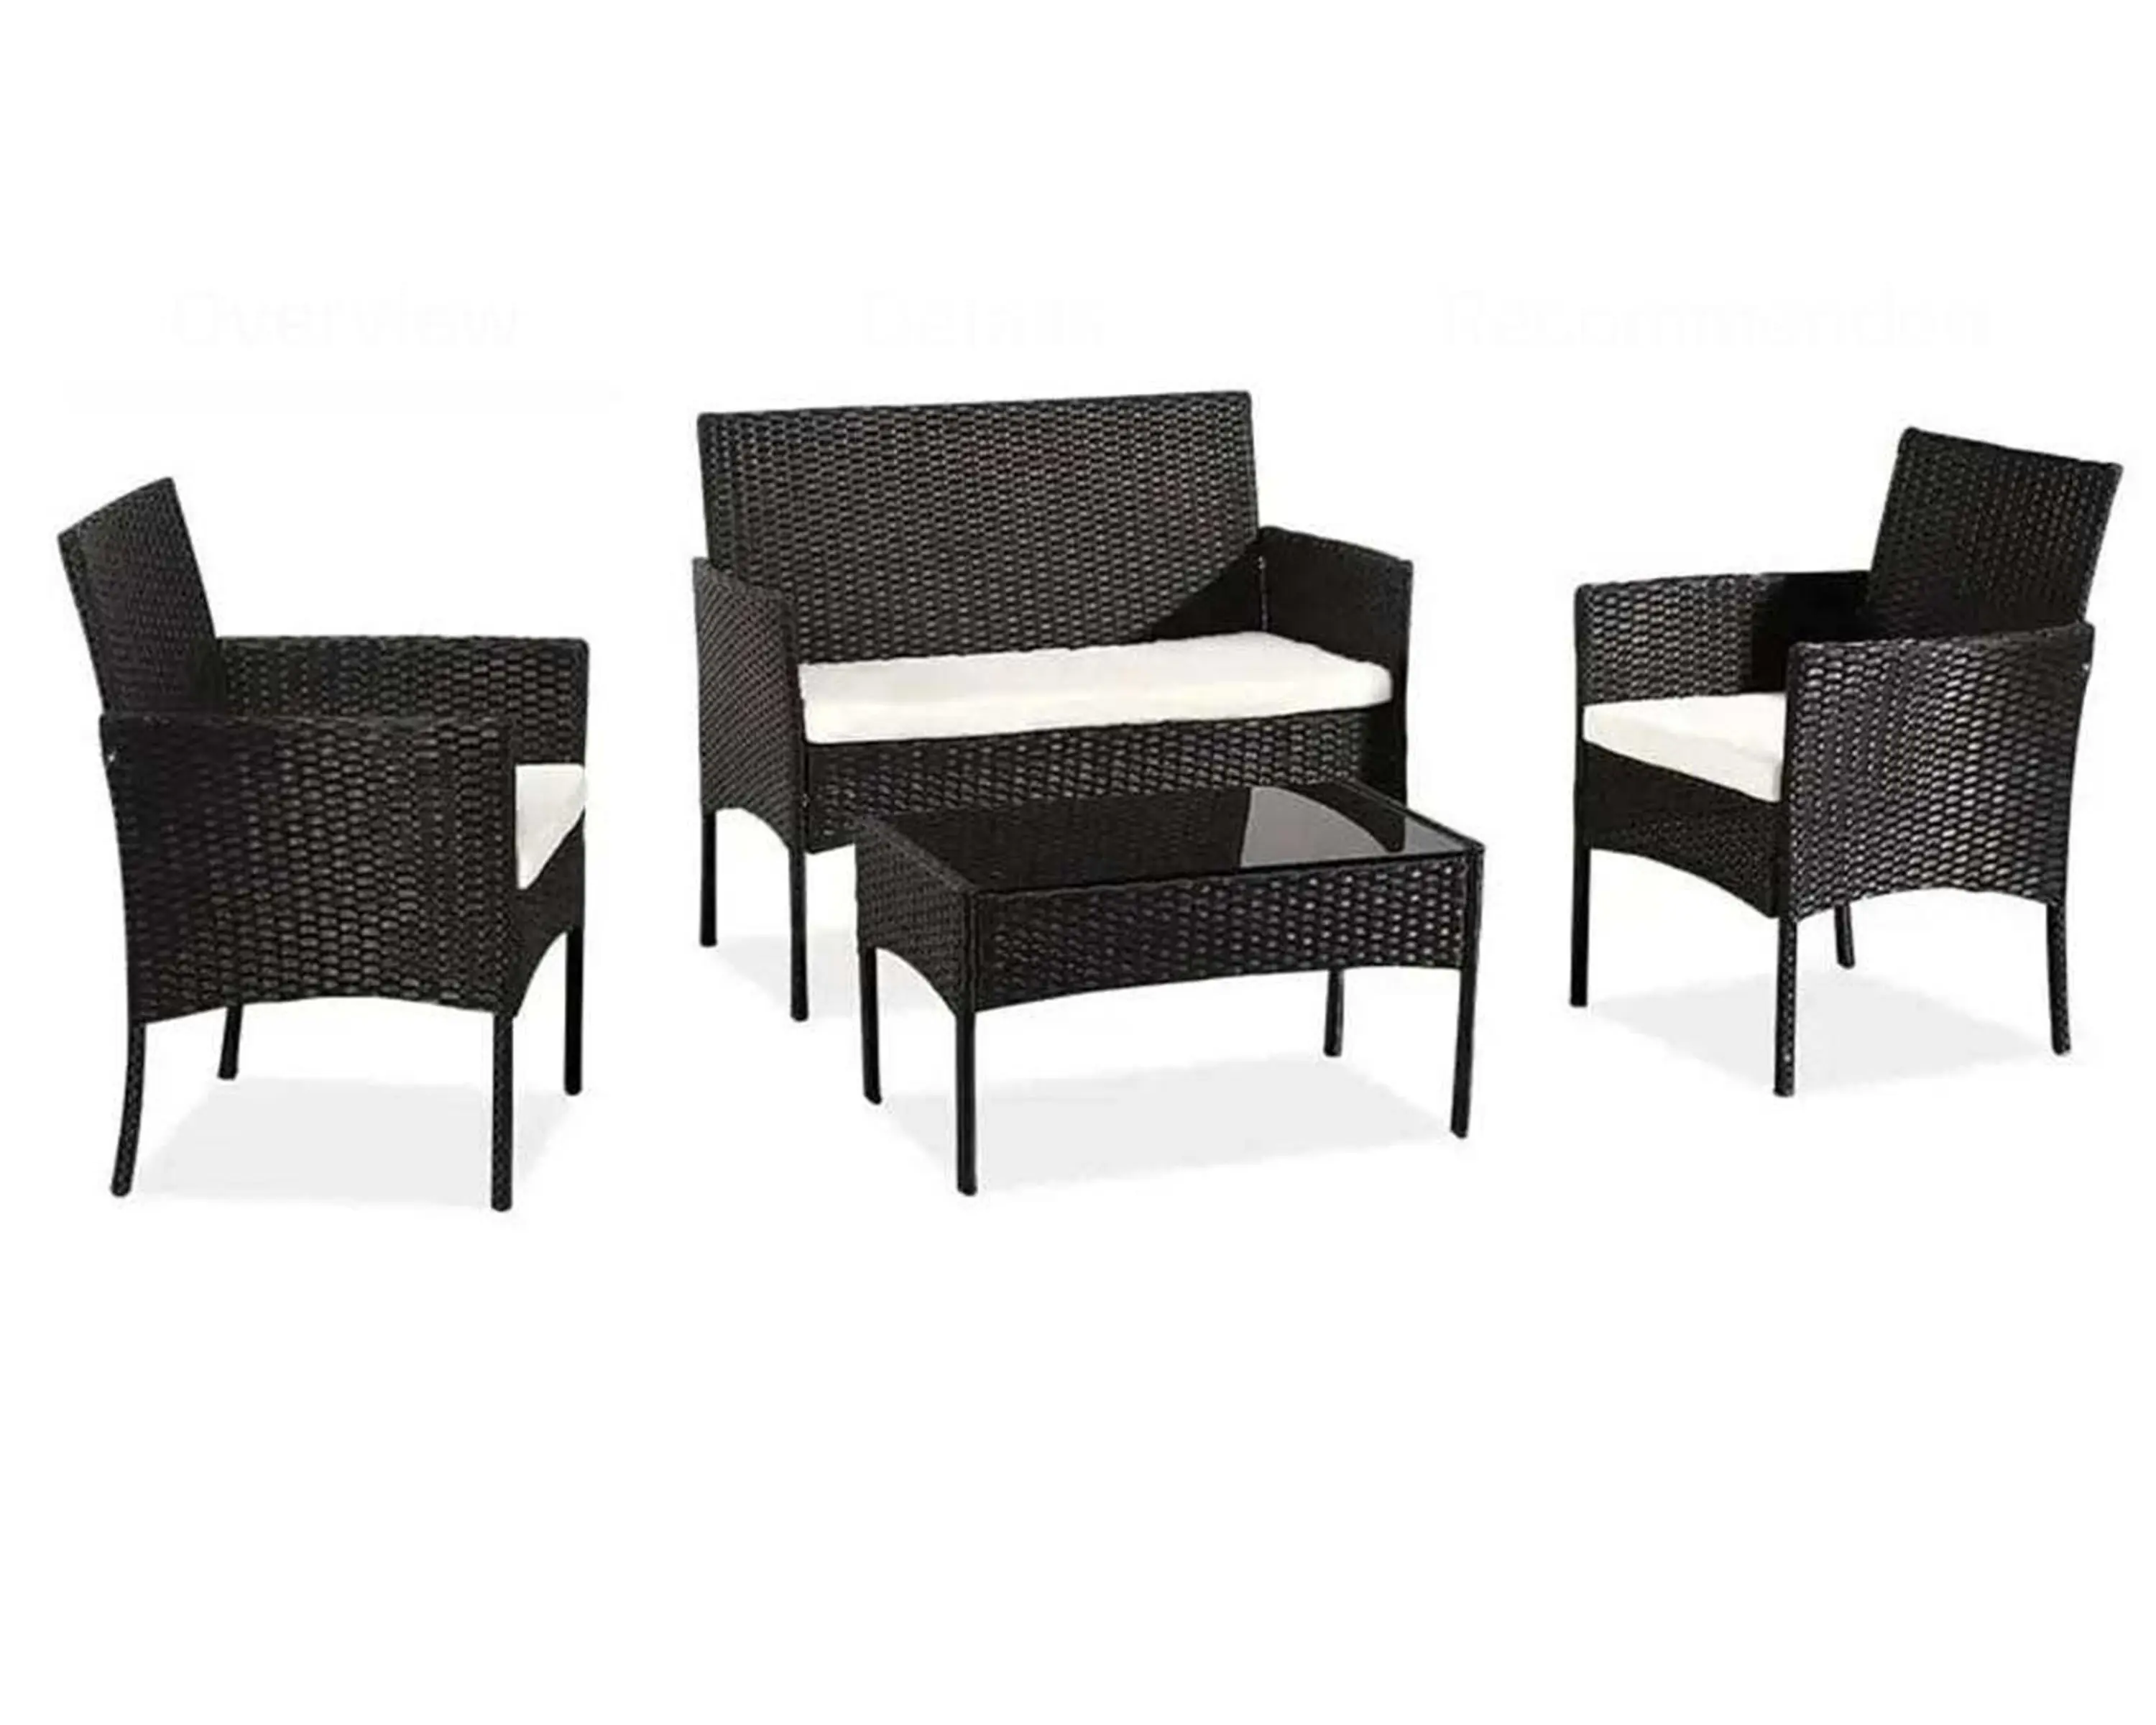 Cheap Bistro Set 4pcs Table Chairs Balcony Set Patio Rattan Furniture Garden Sets Space Saving Furniture